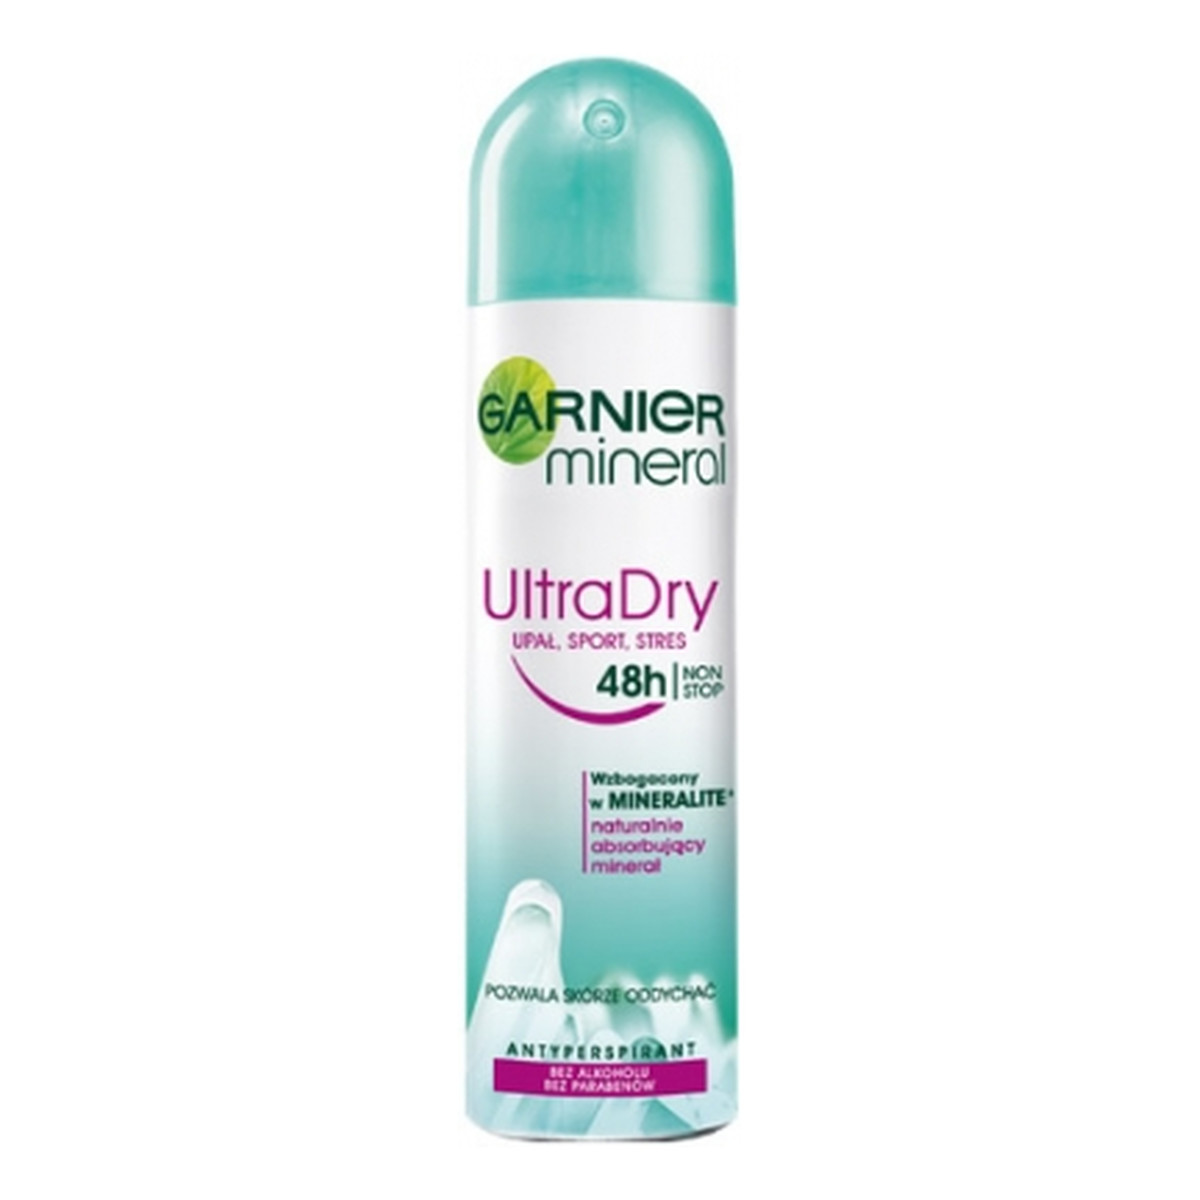 Garnier Mineral Ultra Dry Dezodorant Spray Upał, Stres, Sport 150ml